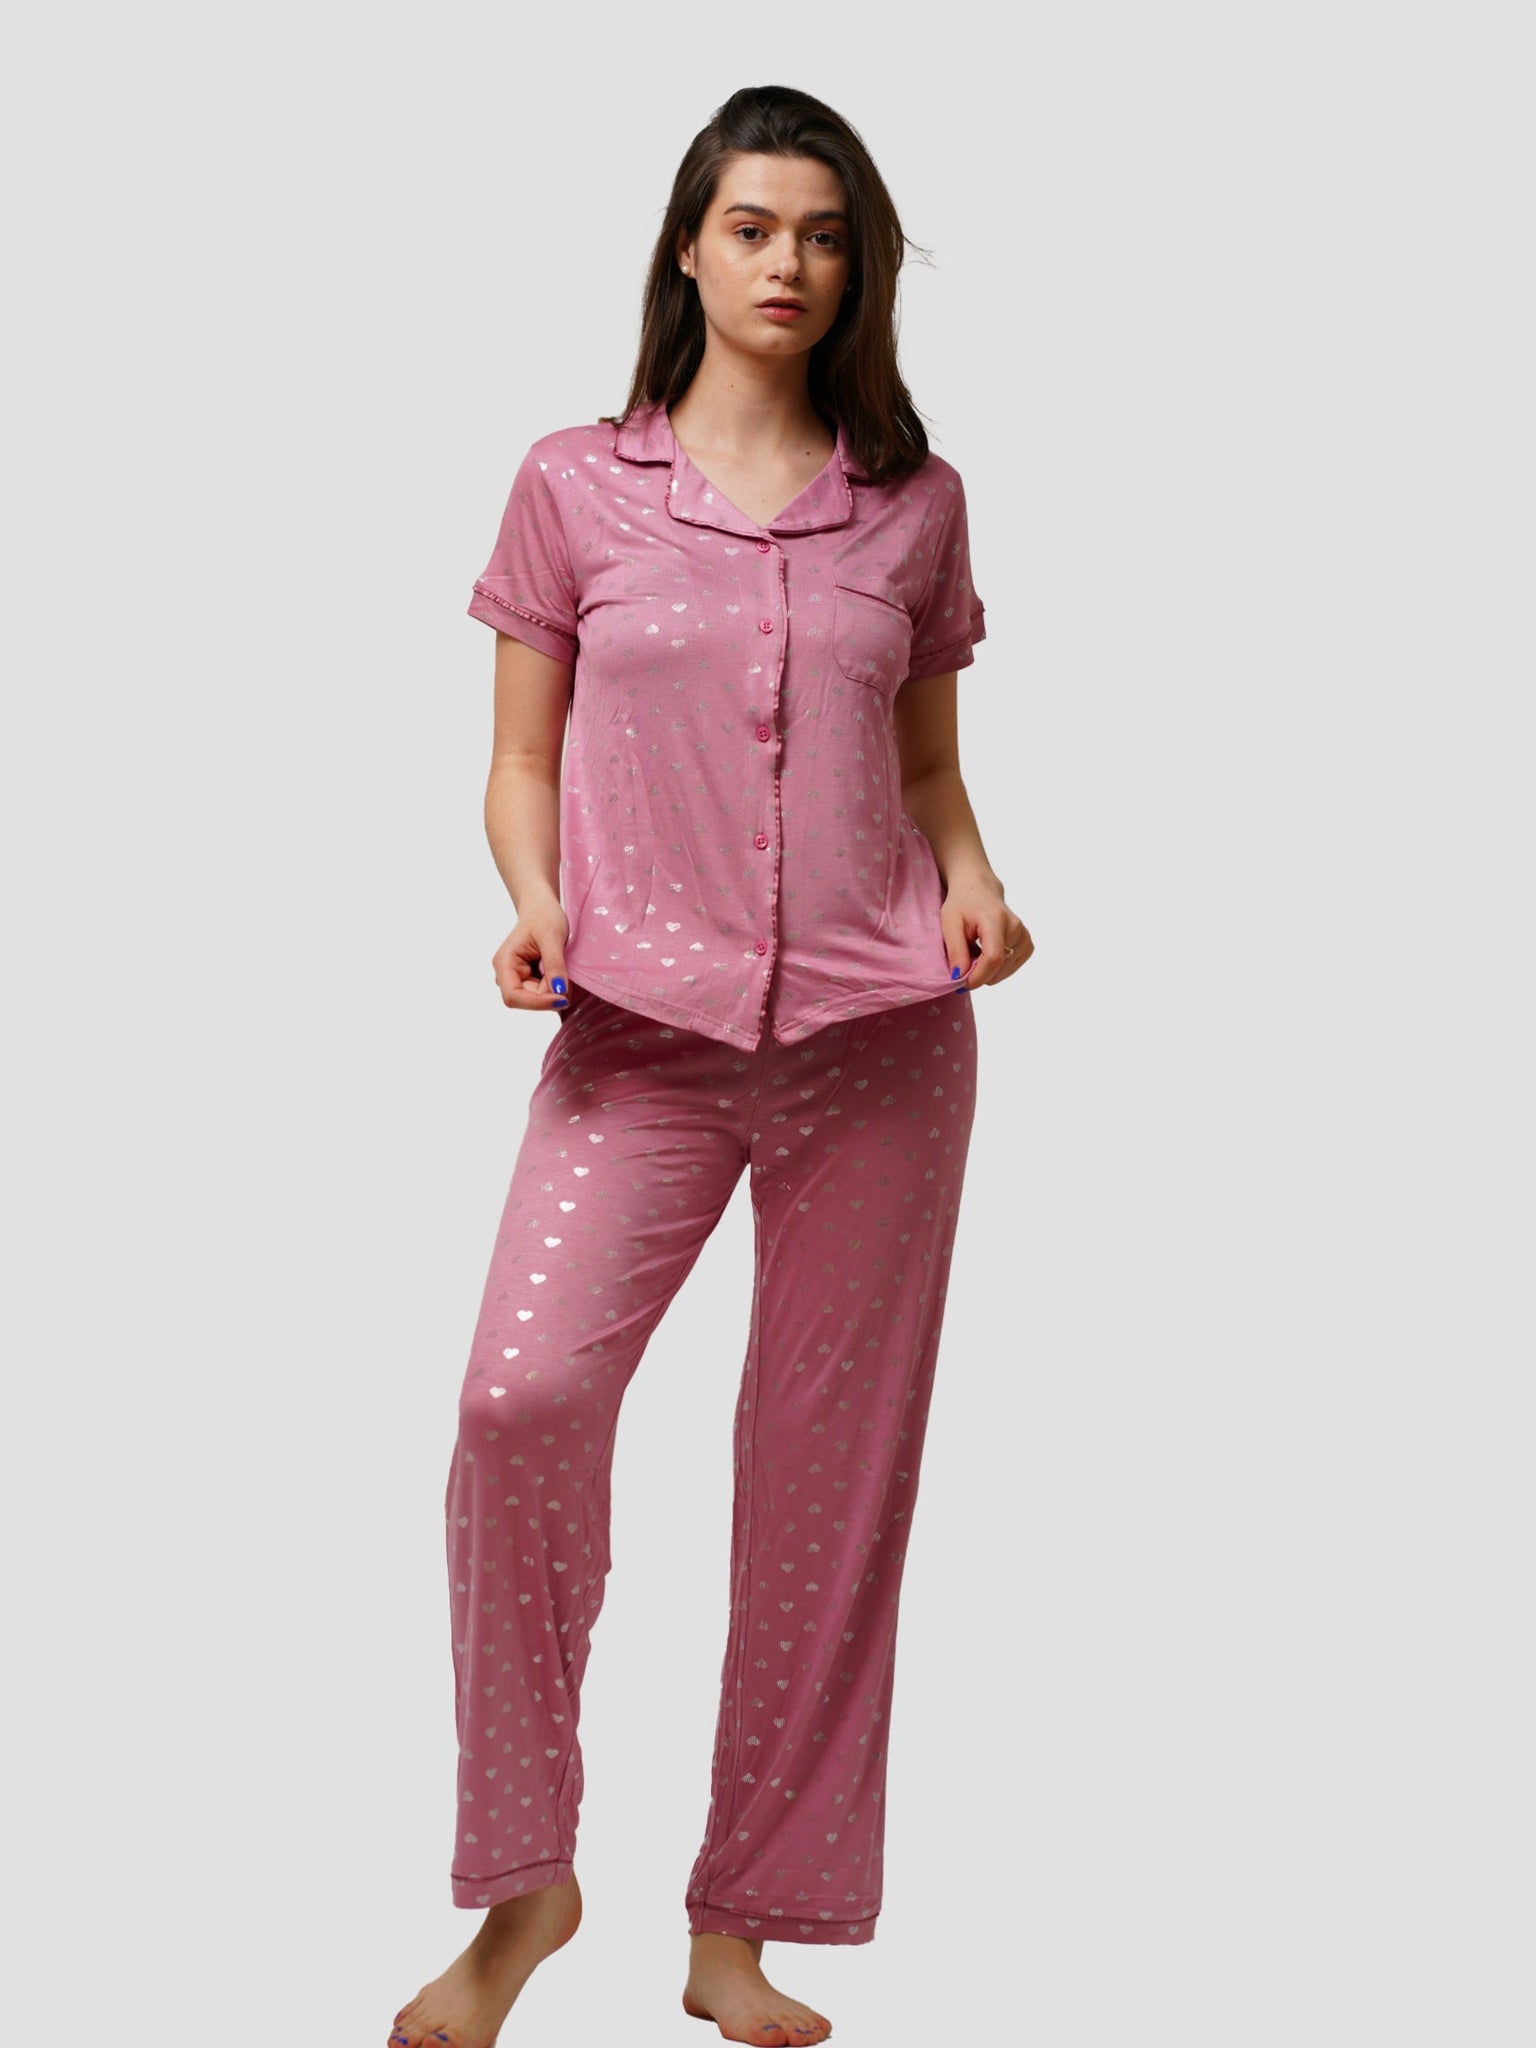 Women's Printed Night Suit Set of Shirt & Pyjama, Night wear Dress - inteblu